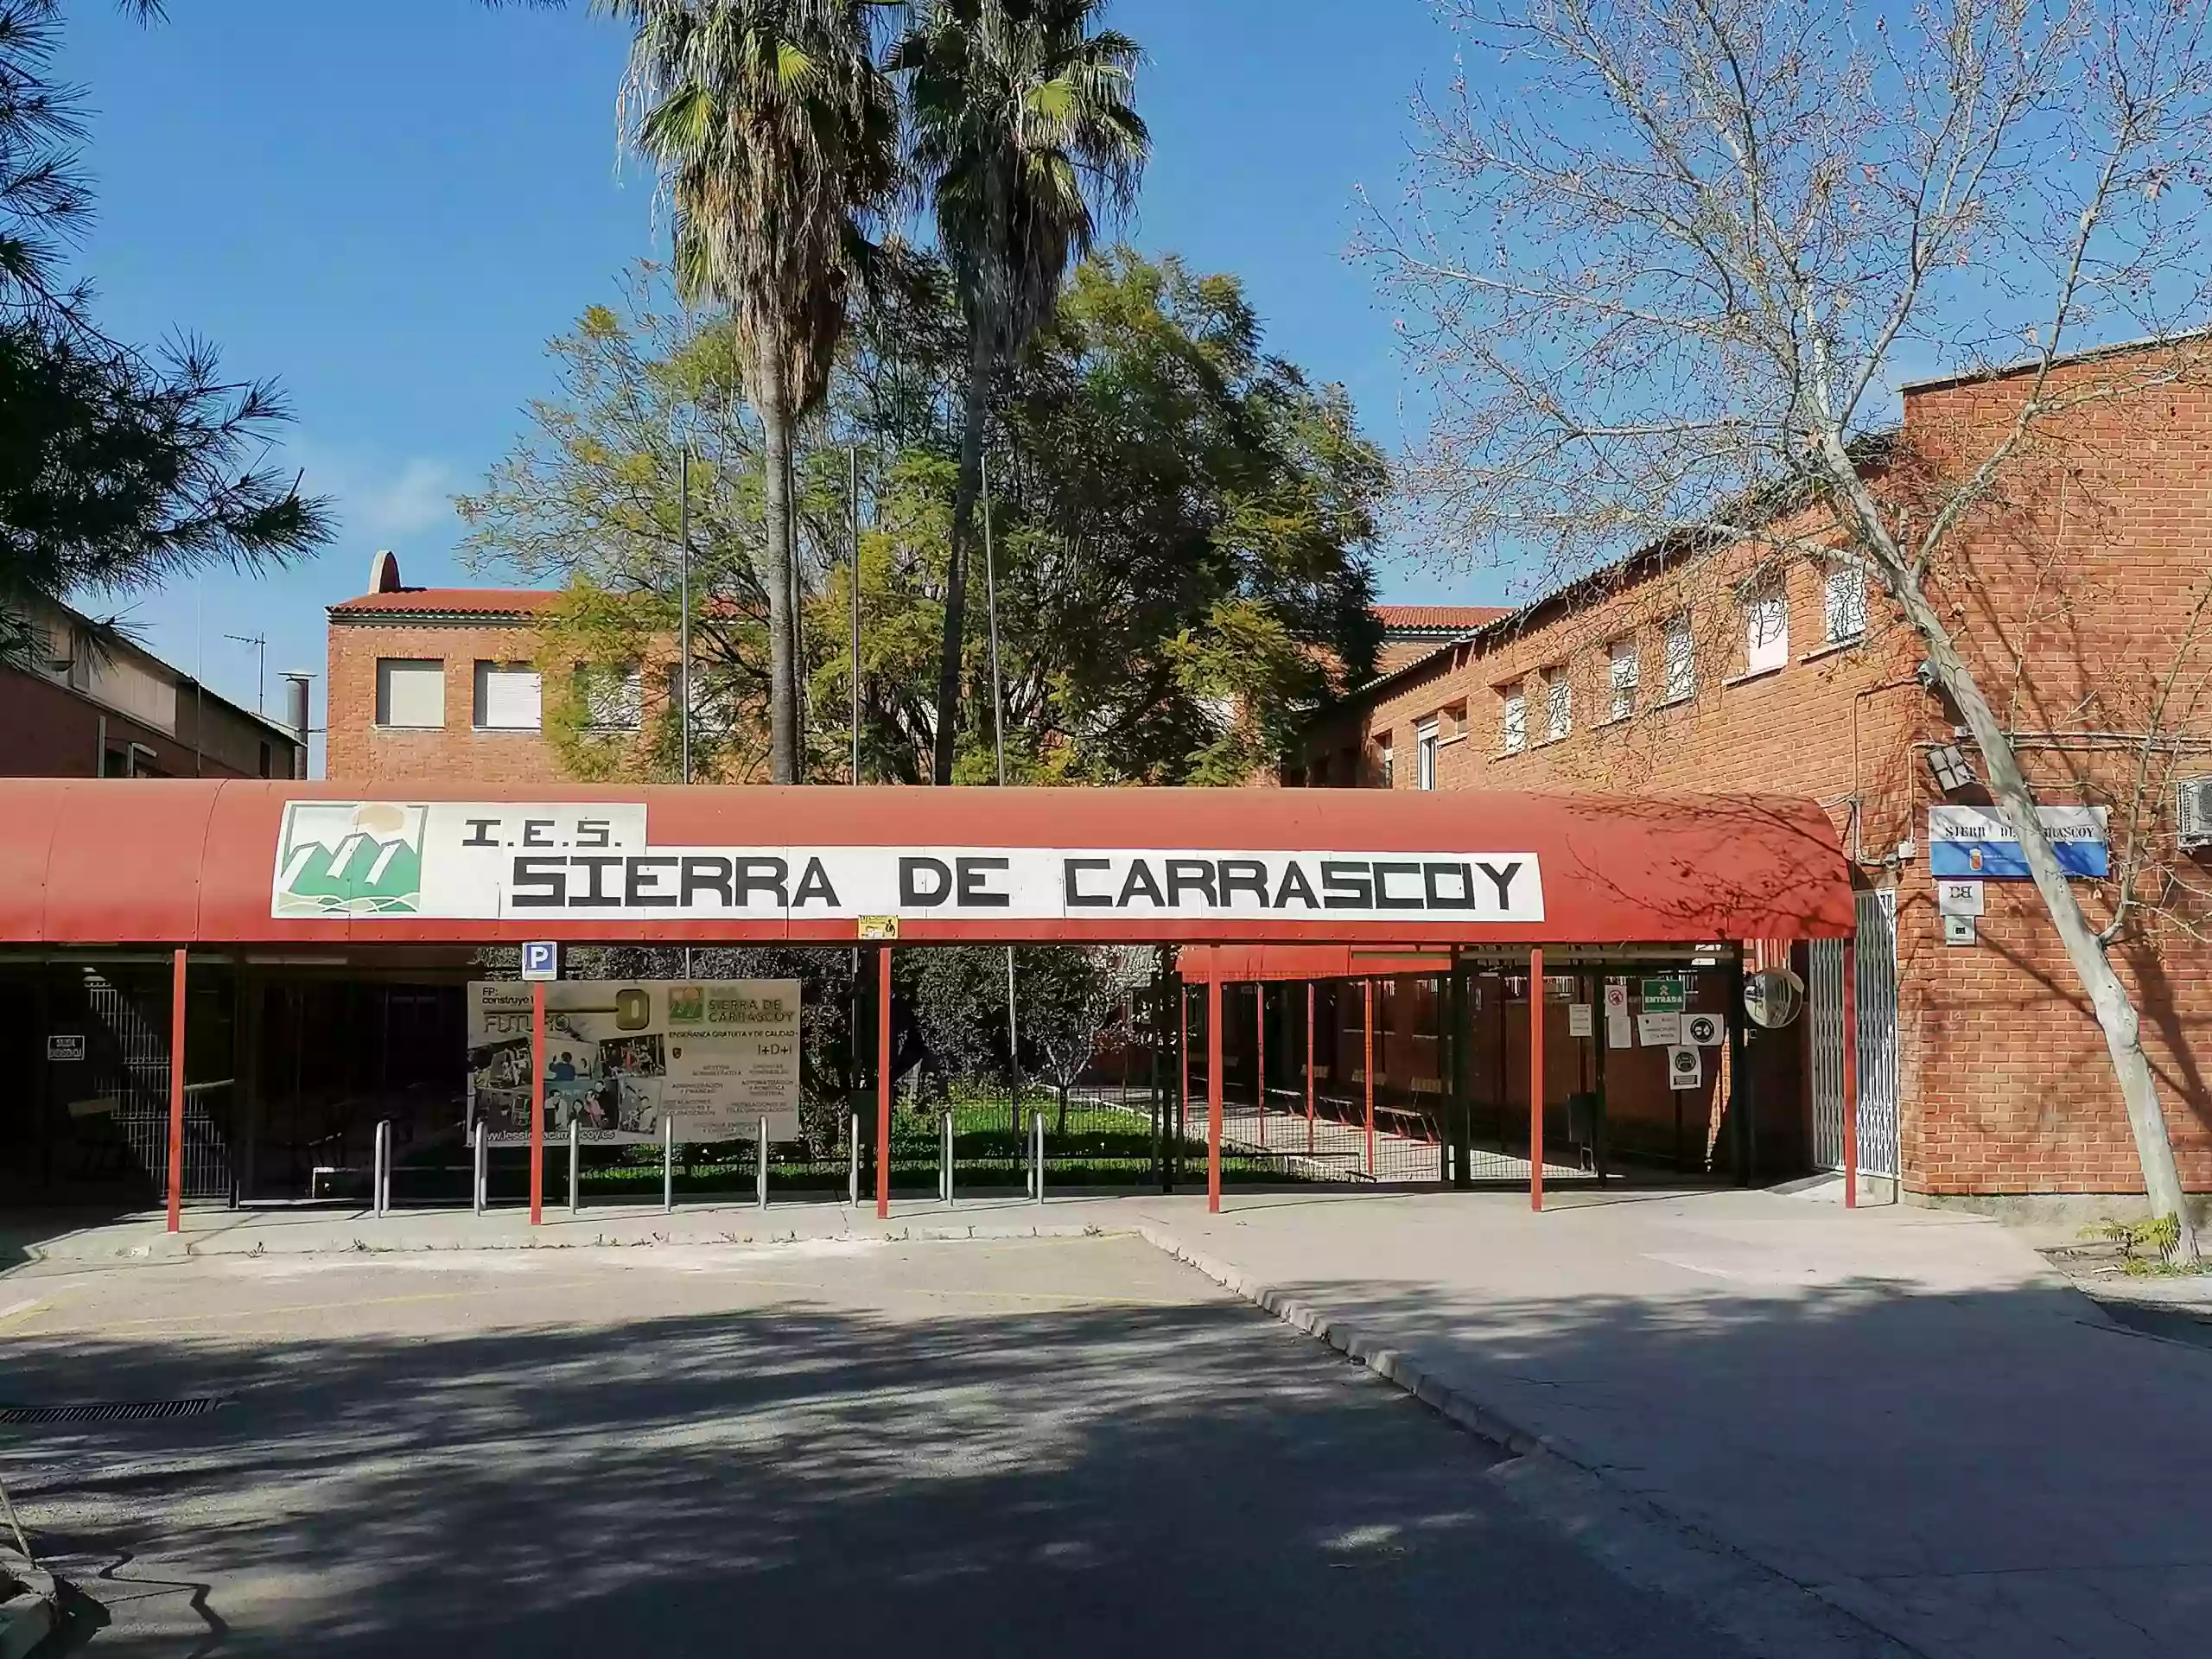 IES Sierra de Carrascoy